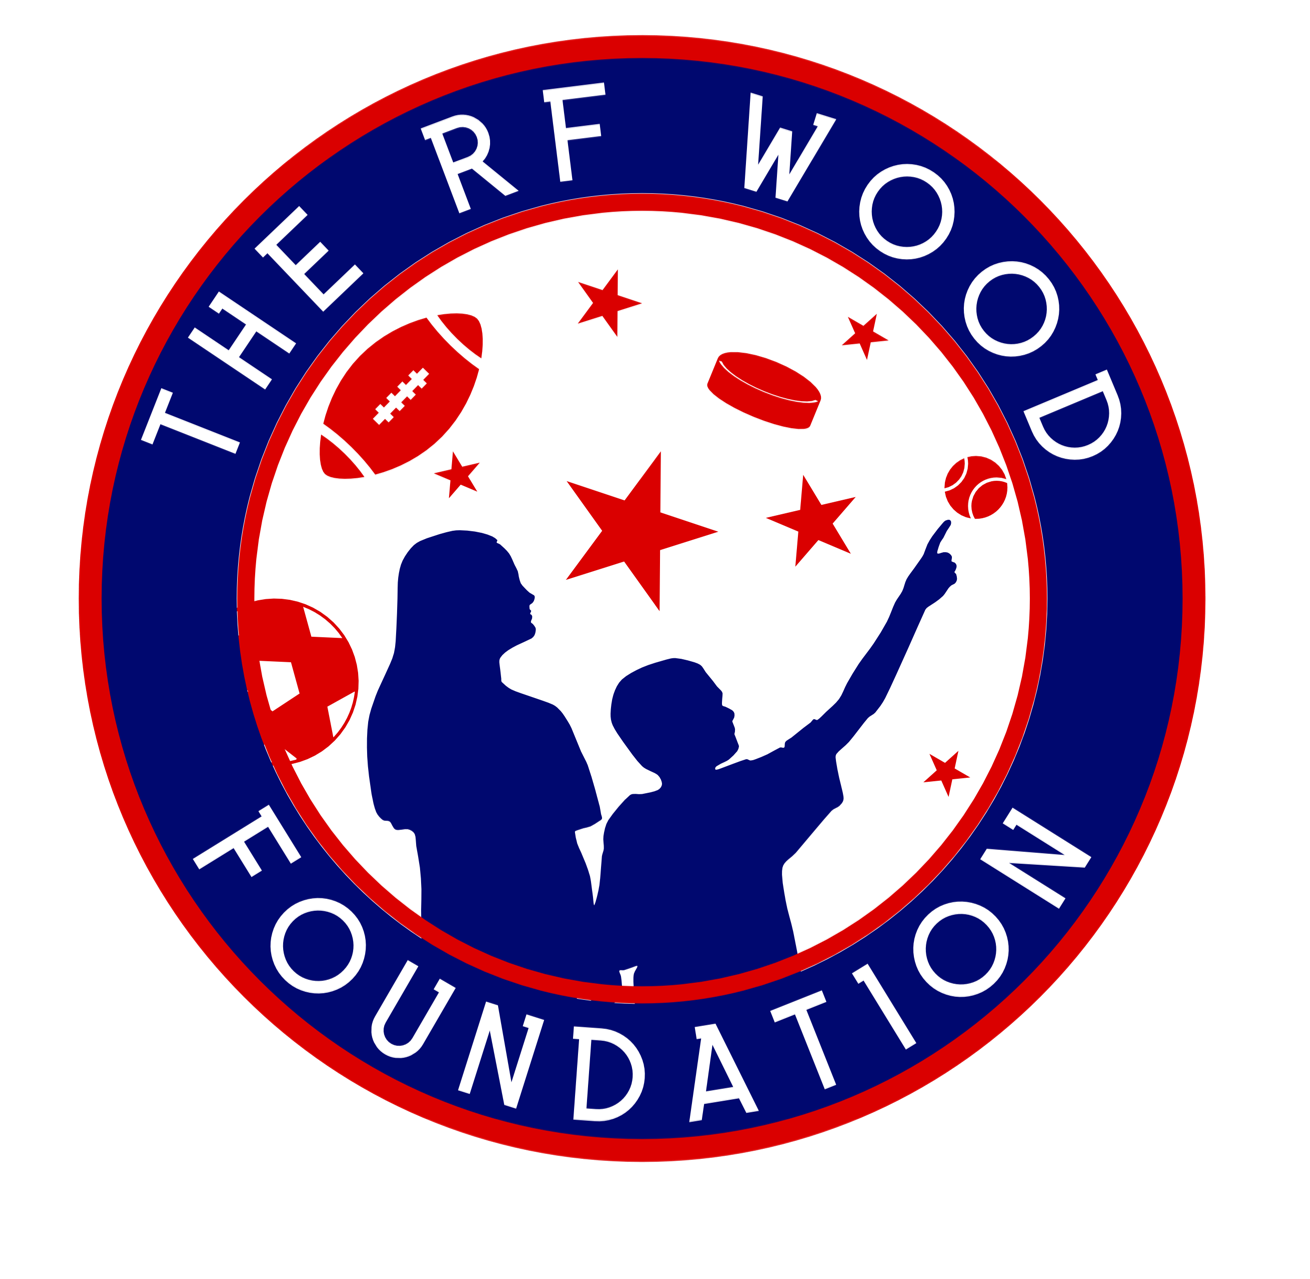 The RF Wood Foundation